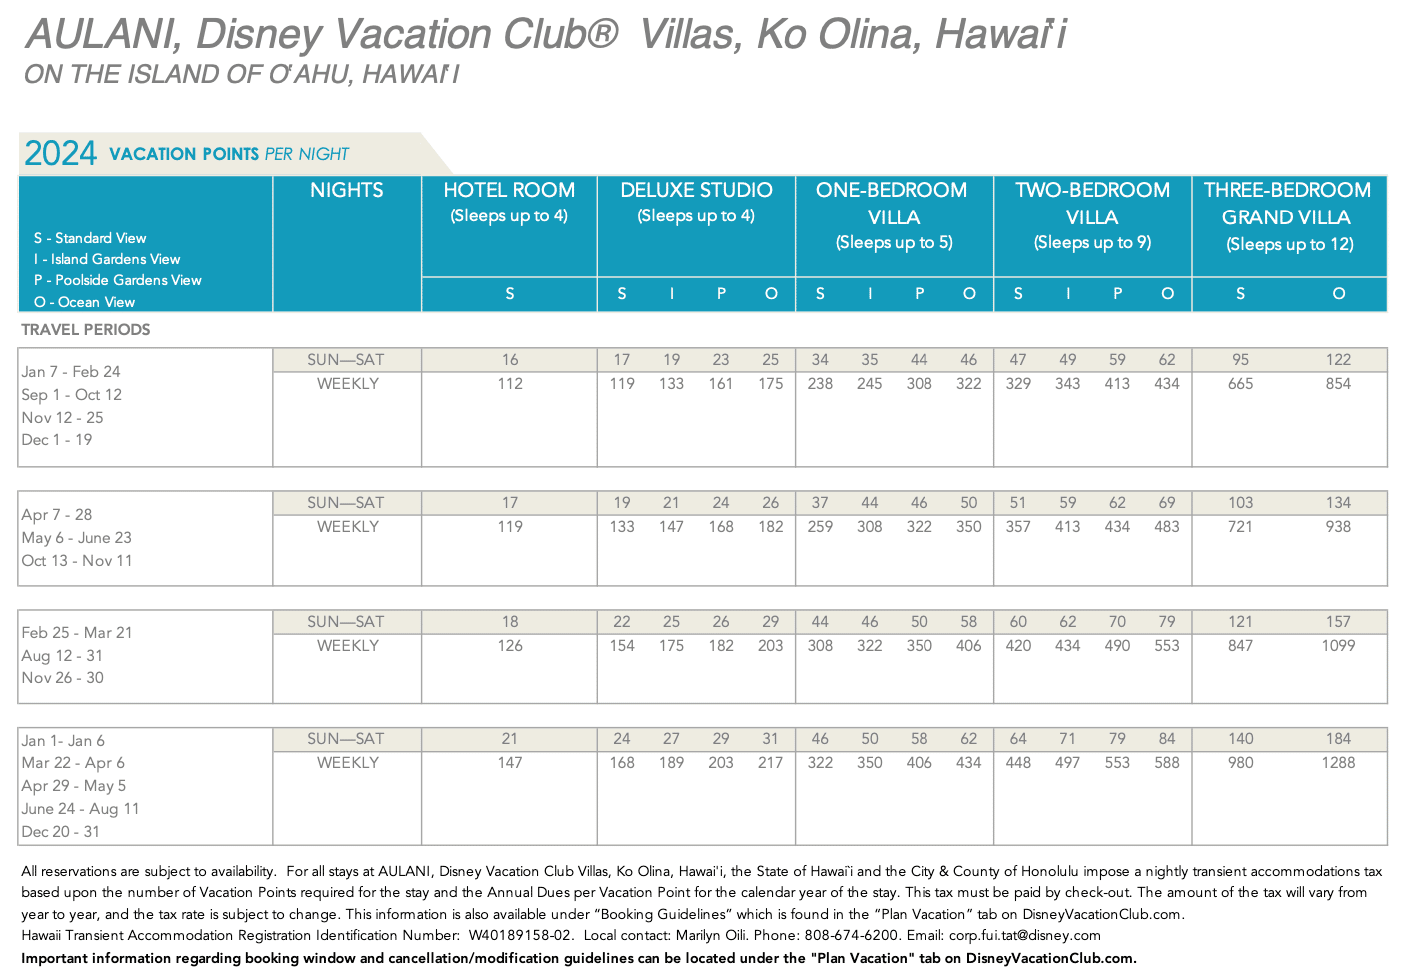 DVC Aulani Villas 2024 Point Chart